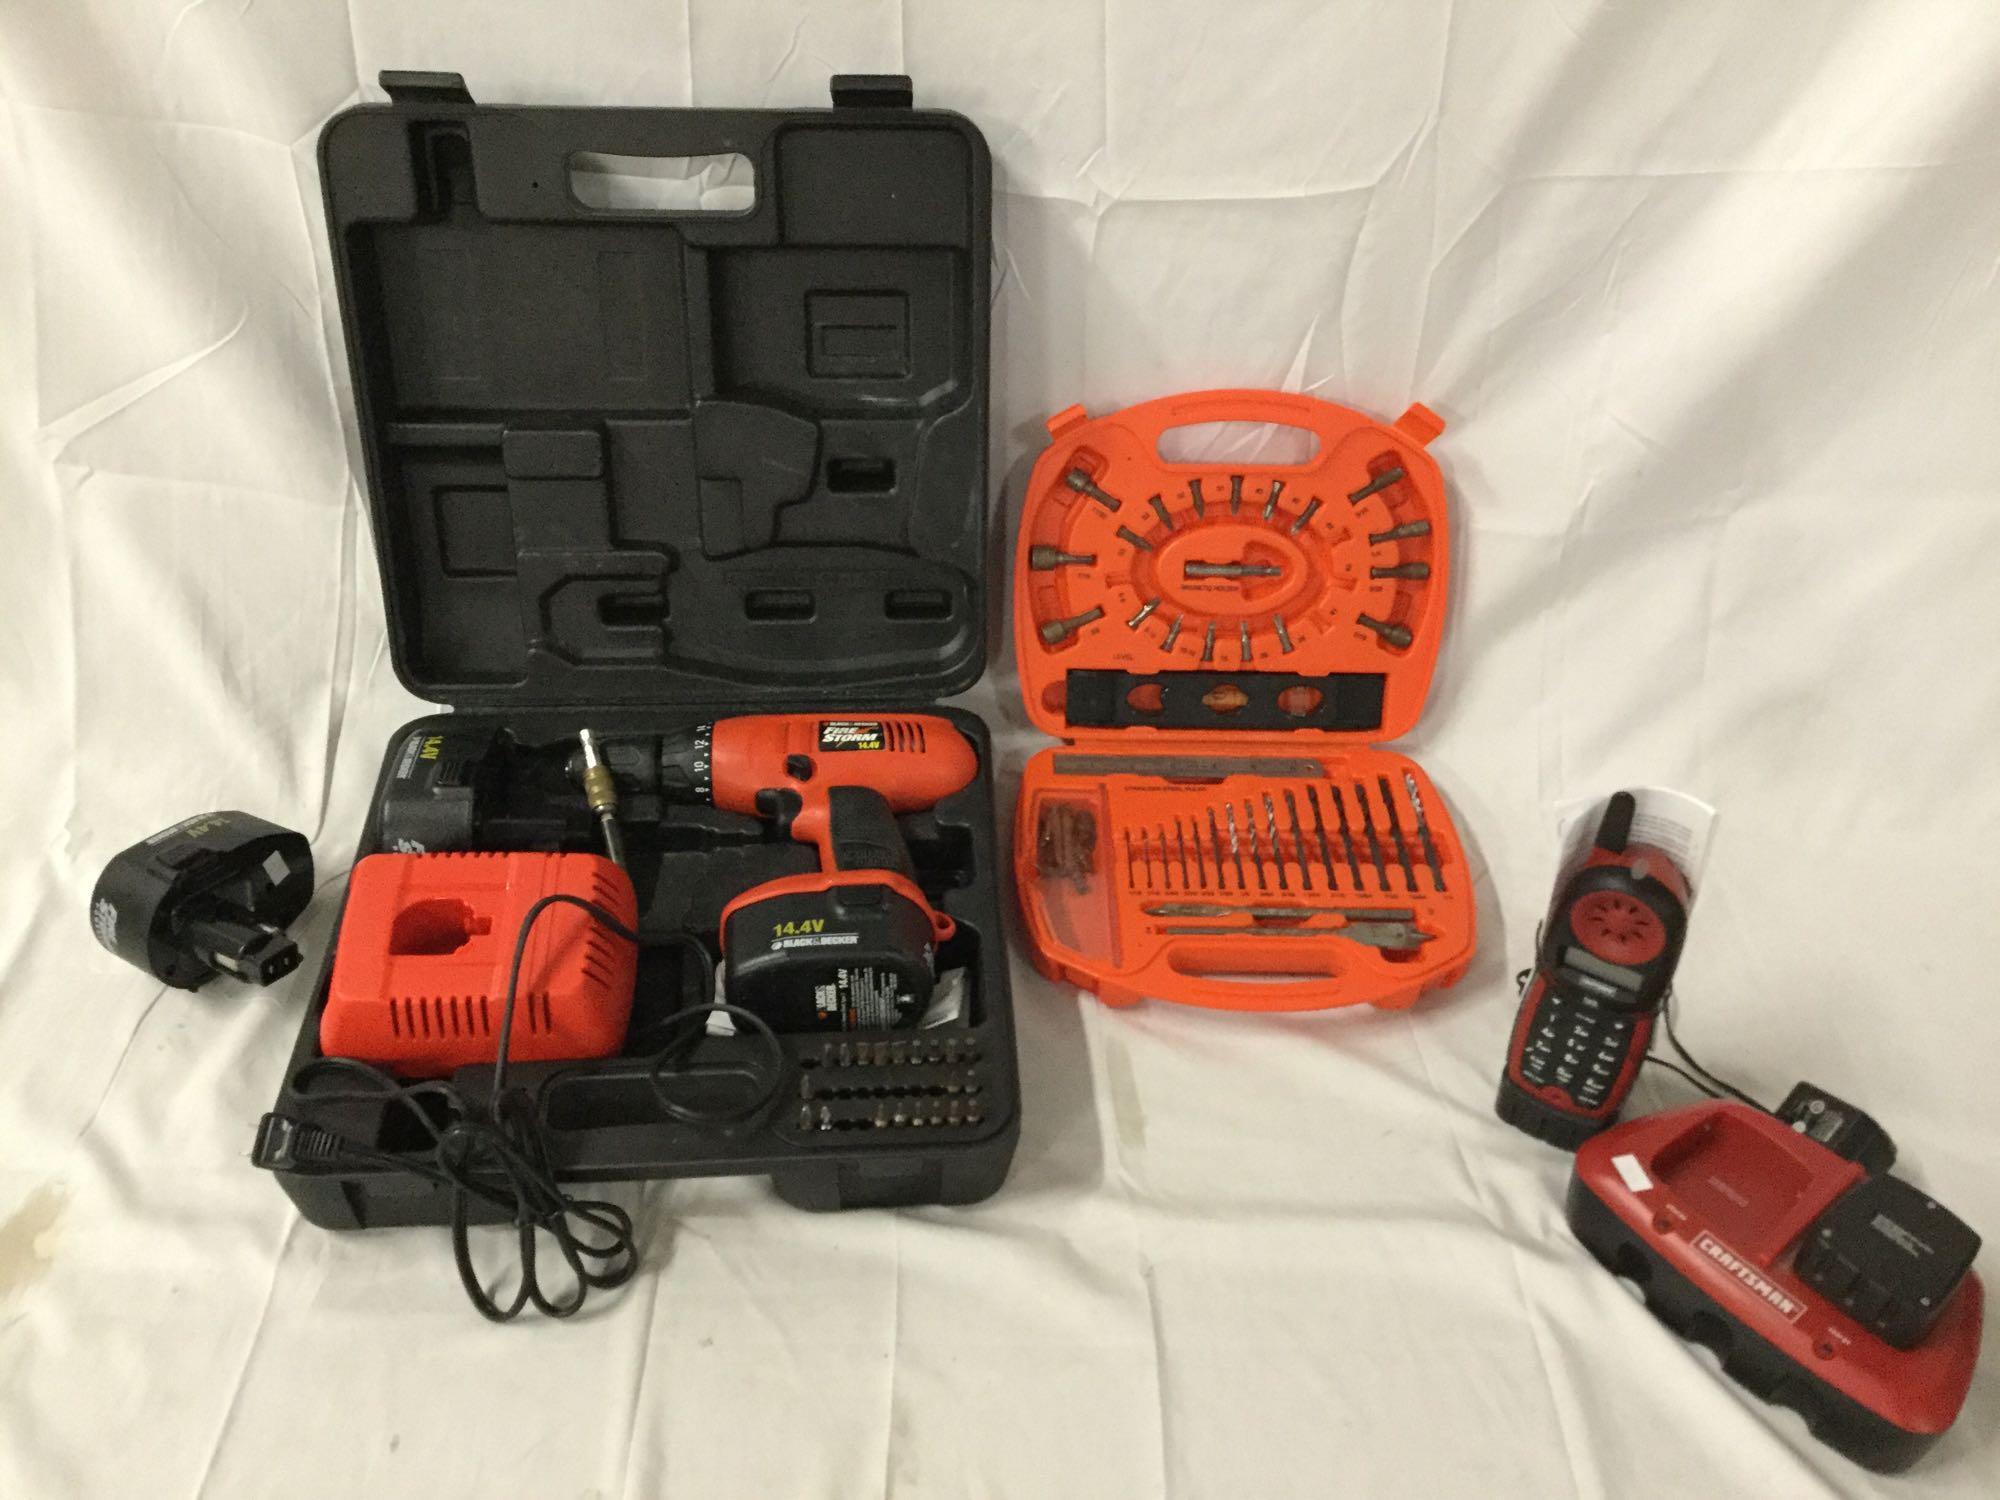 Lot of tools; Black and Decker FireStorm drill